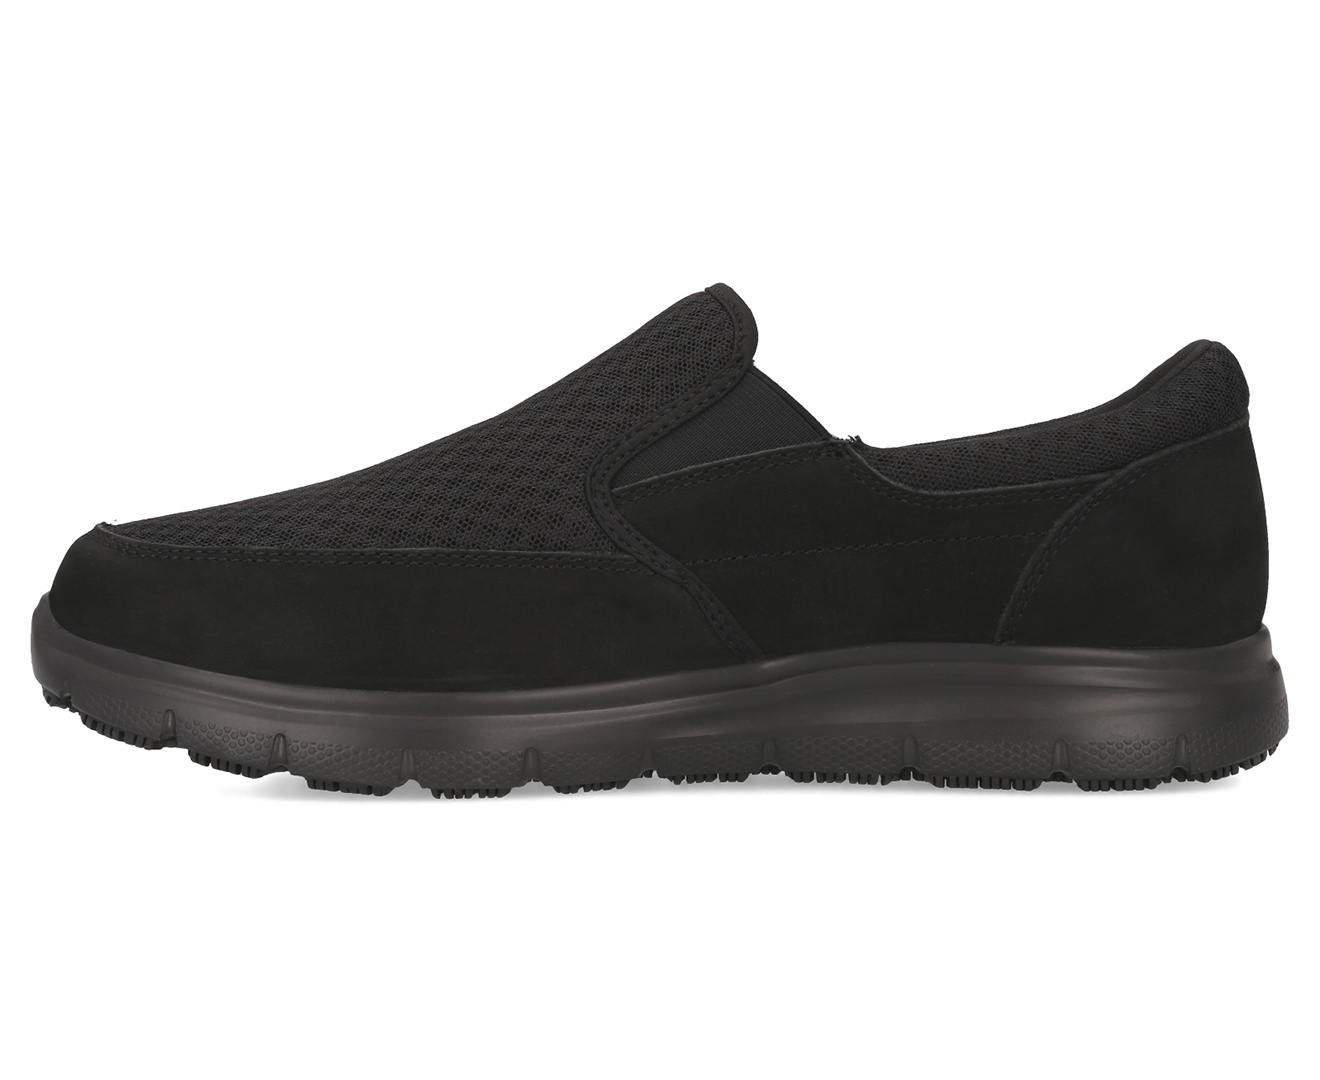 Bata Women's Slip-On Slip Resistant Delta Non Safety Shoes - Black ...